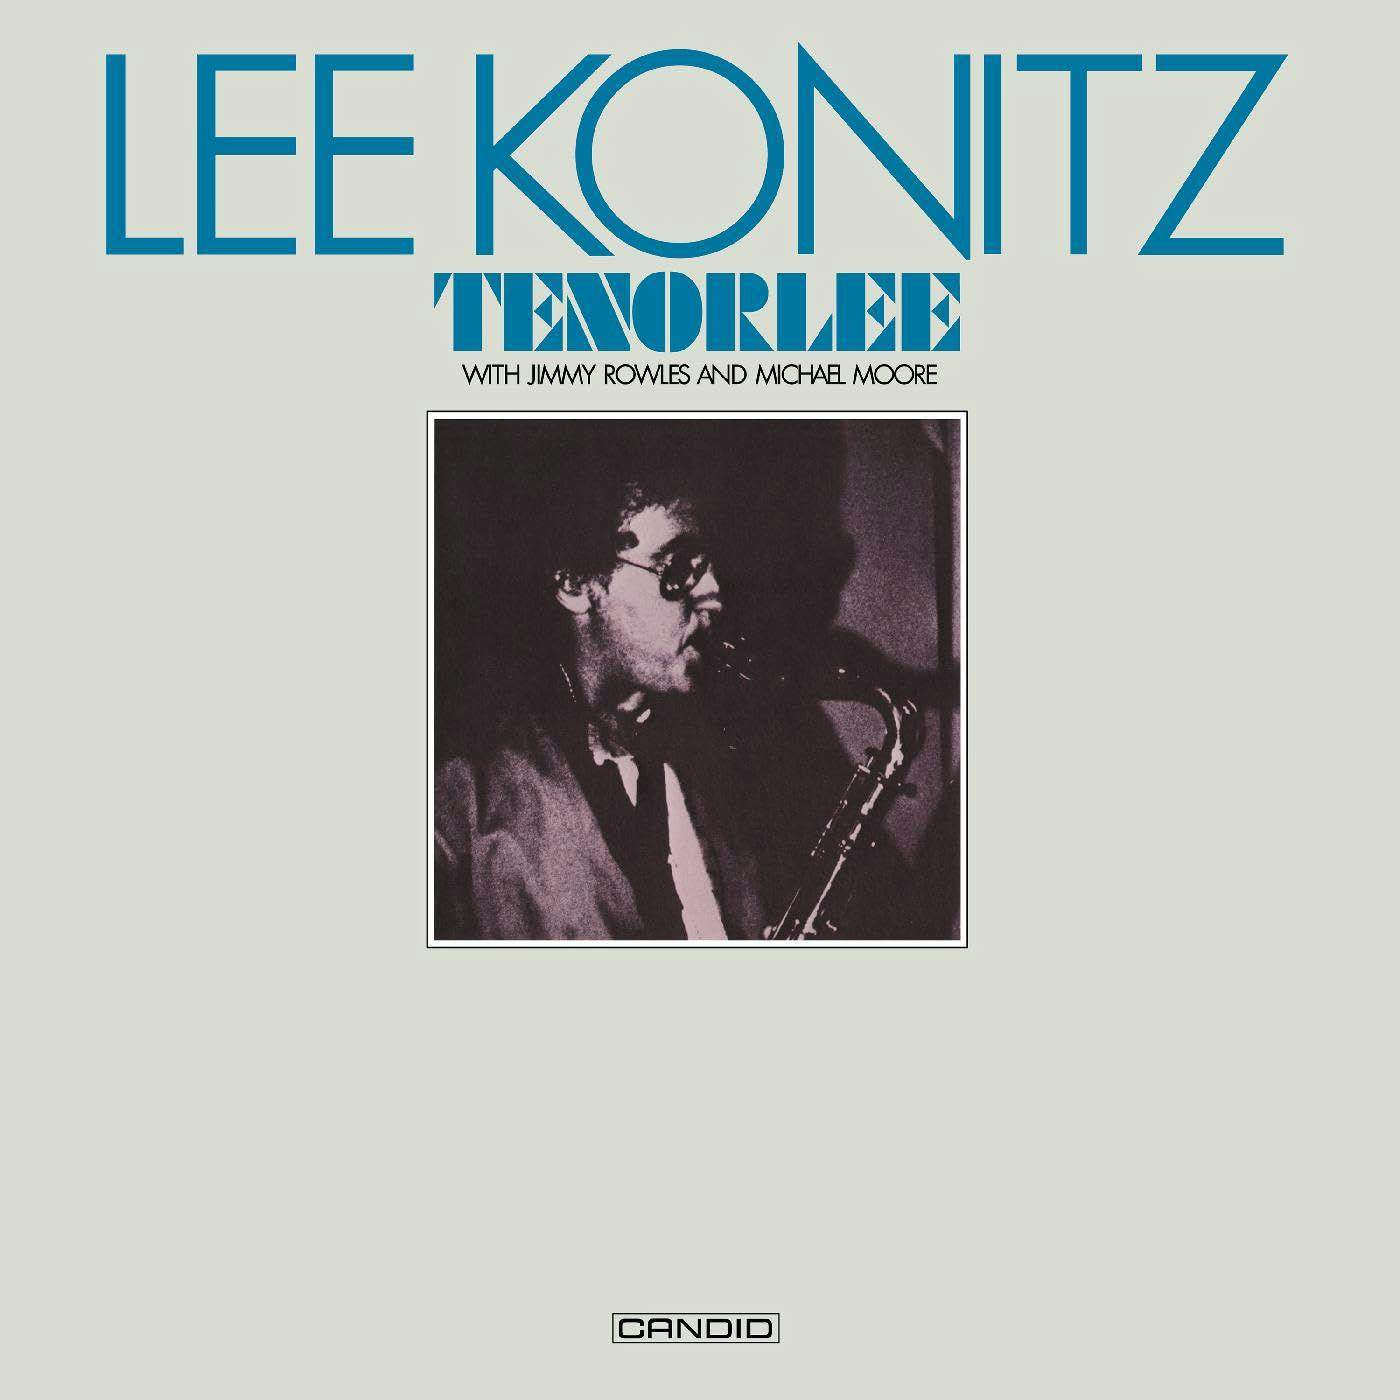 Lee Konitz Tenorlee (180g) Vinyl Record